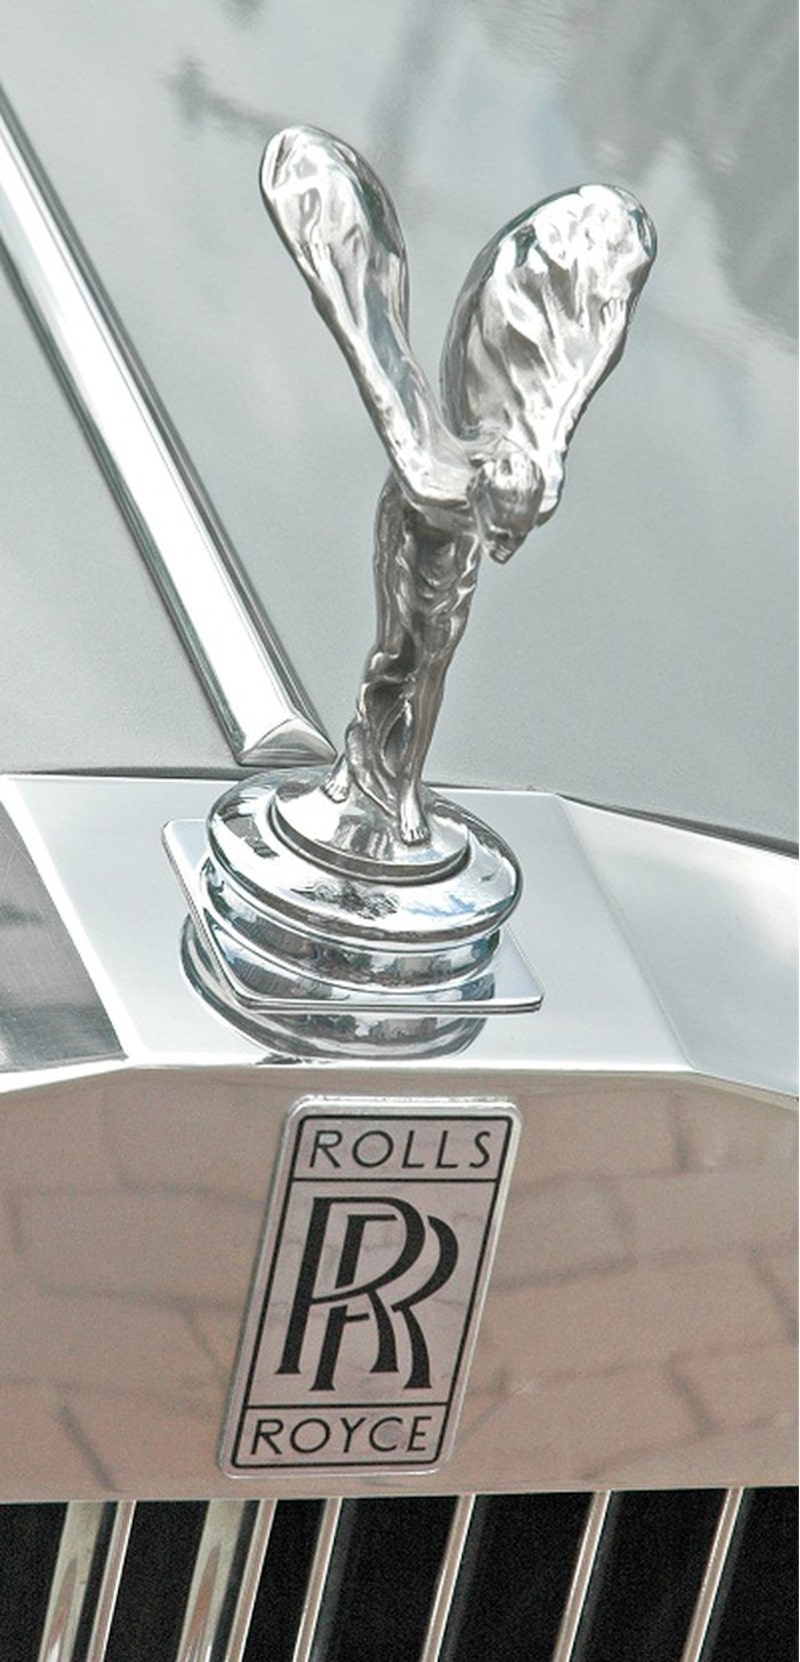 Rolls-royce-cua-nuoc-nao-6